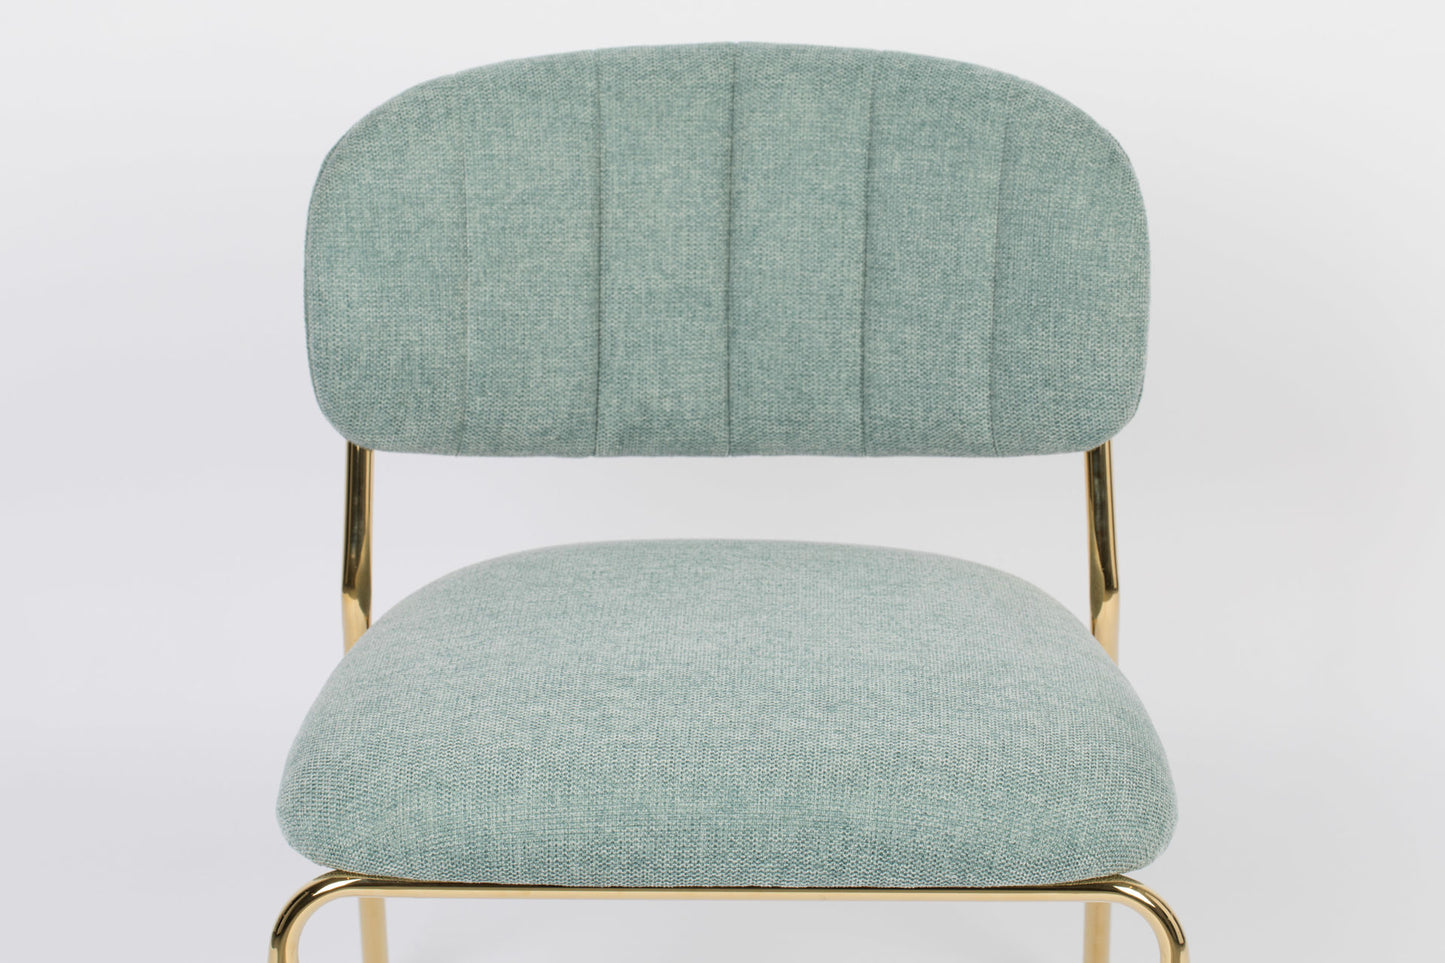 Nancy's Diamond Springs Lounge Chair - Industrial -Light green - Polyester, Plywood, Steel - 60 cm x 56 cm x 68 cm